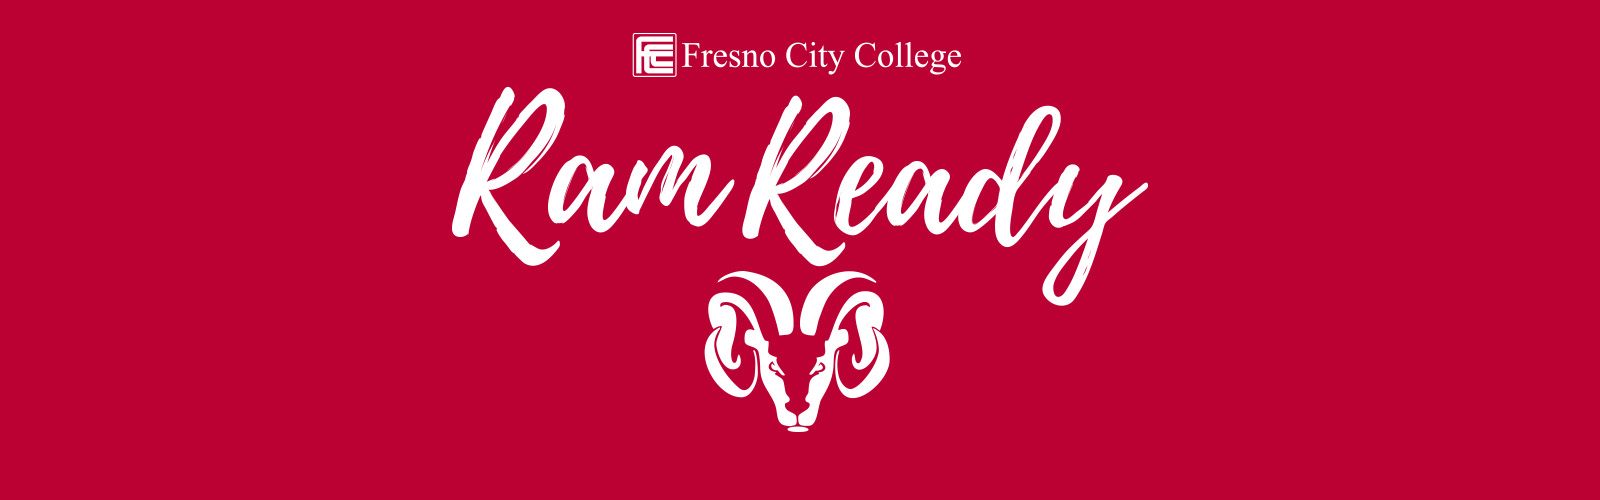 Ram Ready  Fresno City College